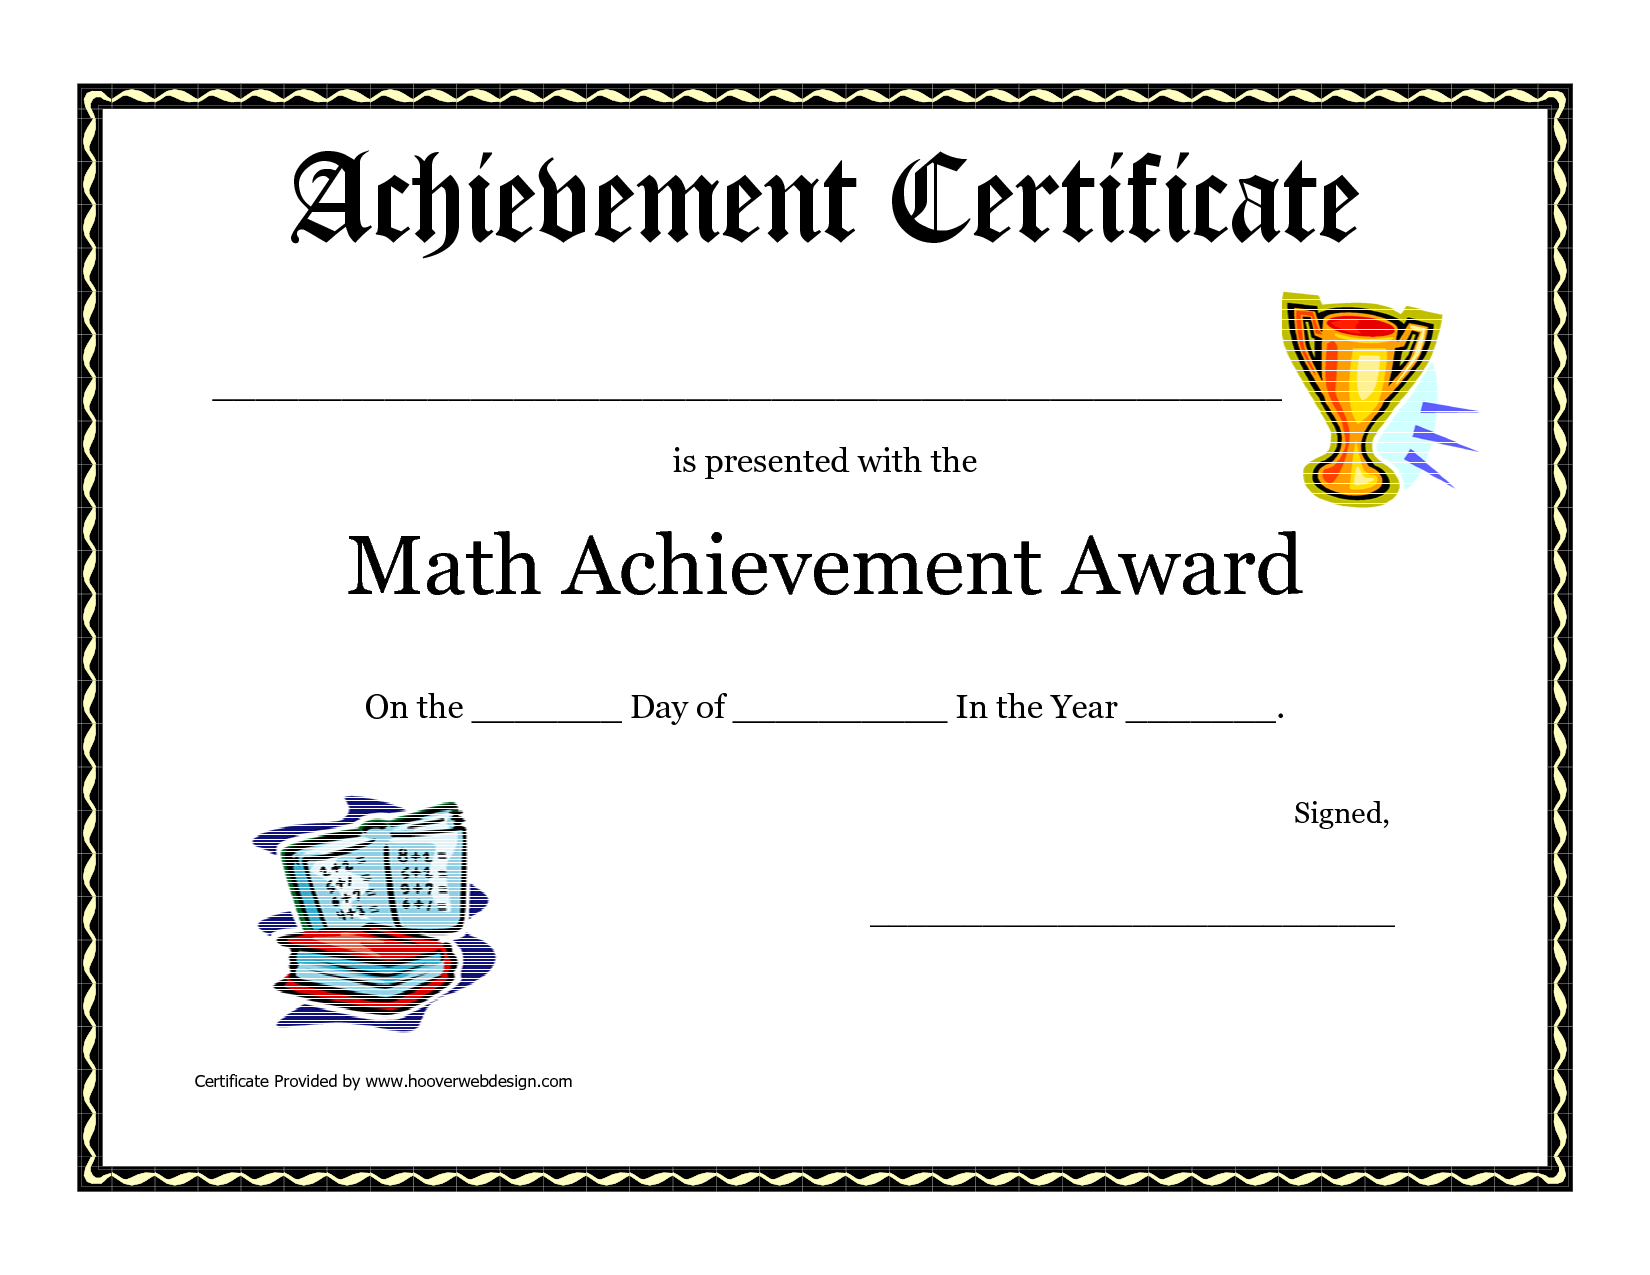 Math Achievement Award Printable Certificate Pdf | Math Regarding Classroom Certificates Templates